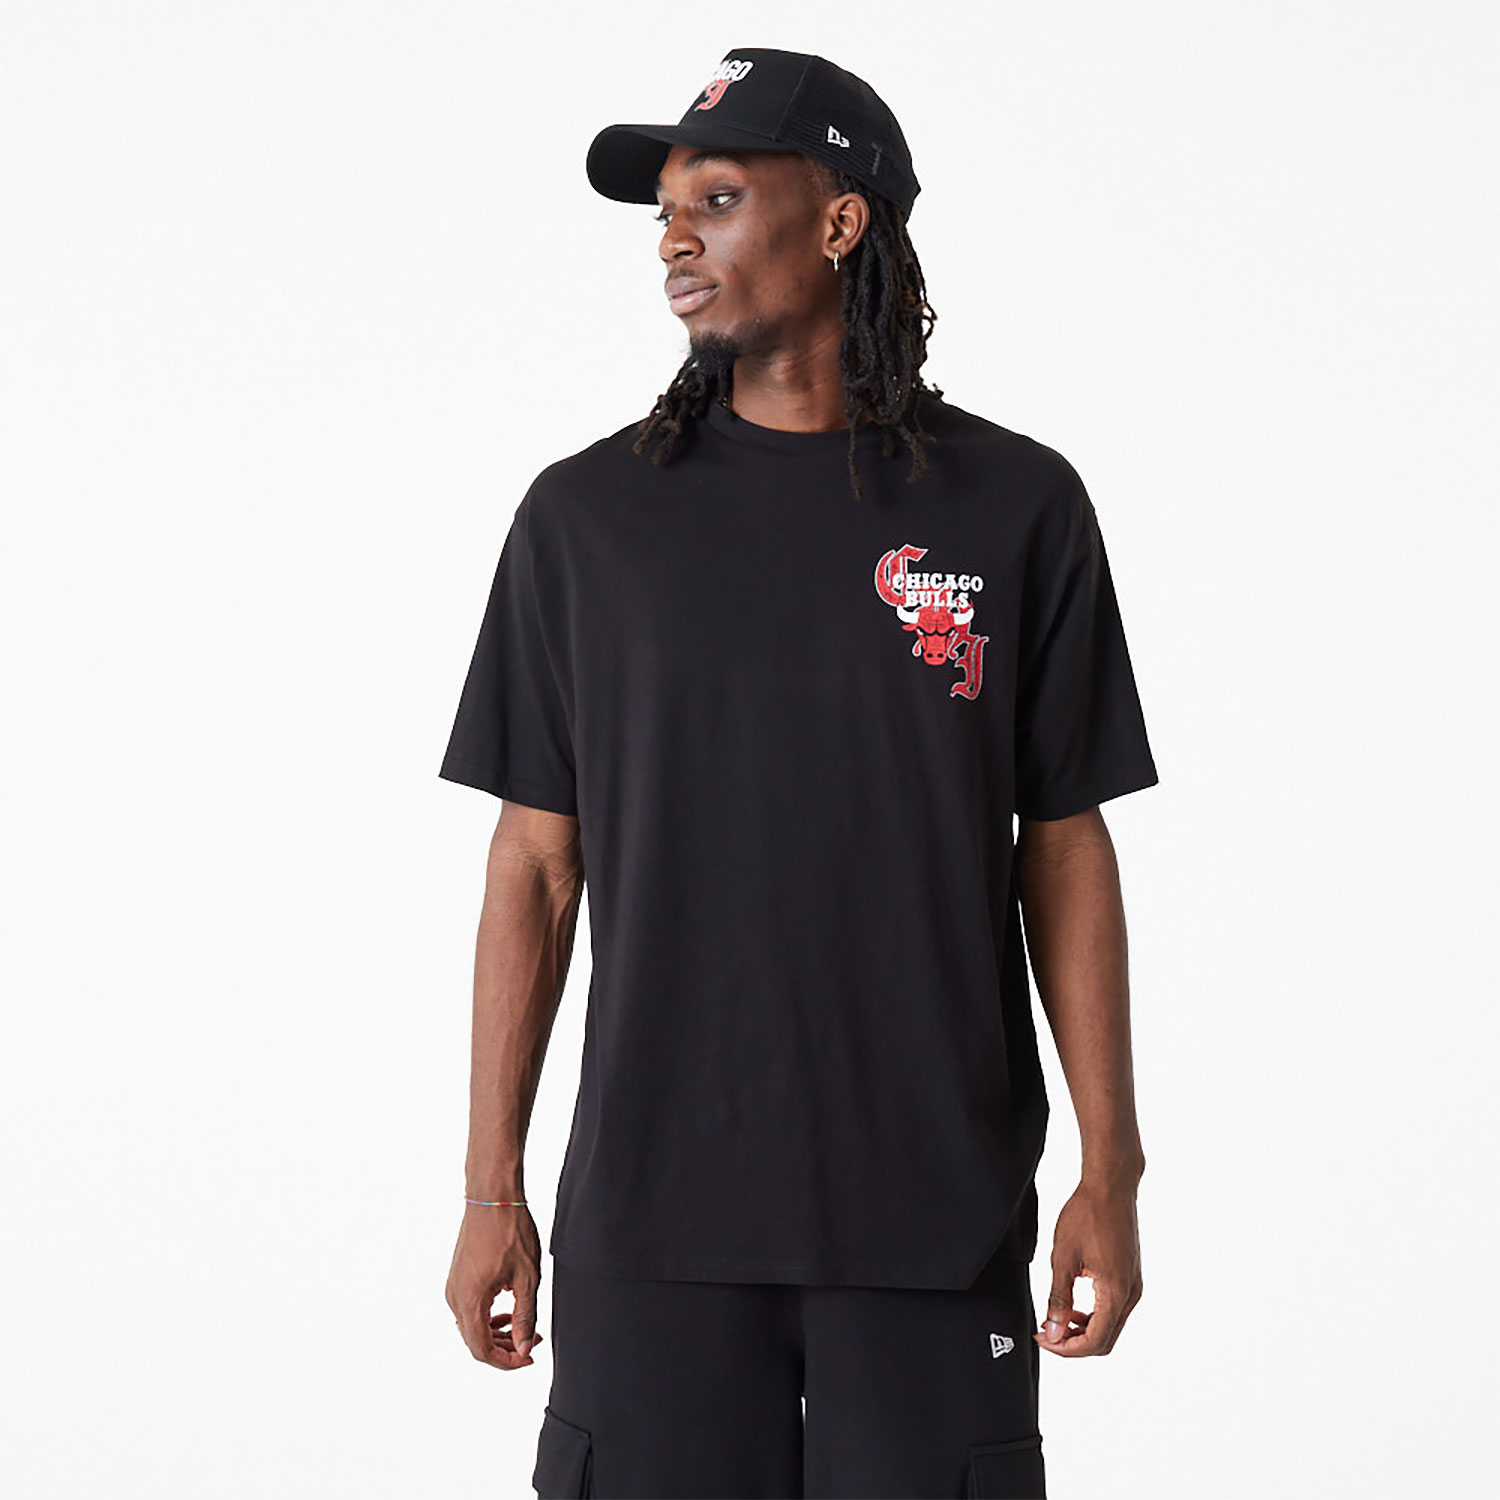 Chicago Bulls Team Graphic Black Oversized T-Shirt